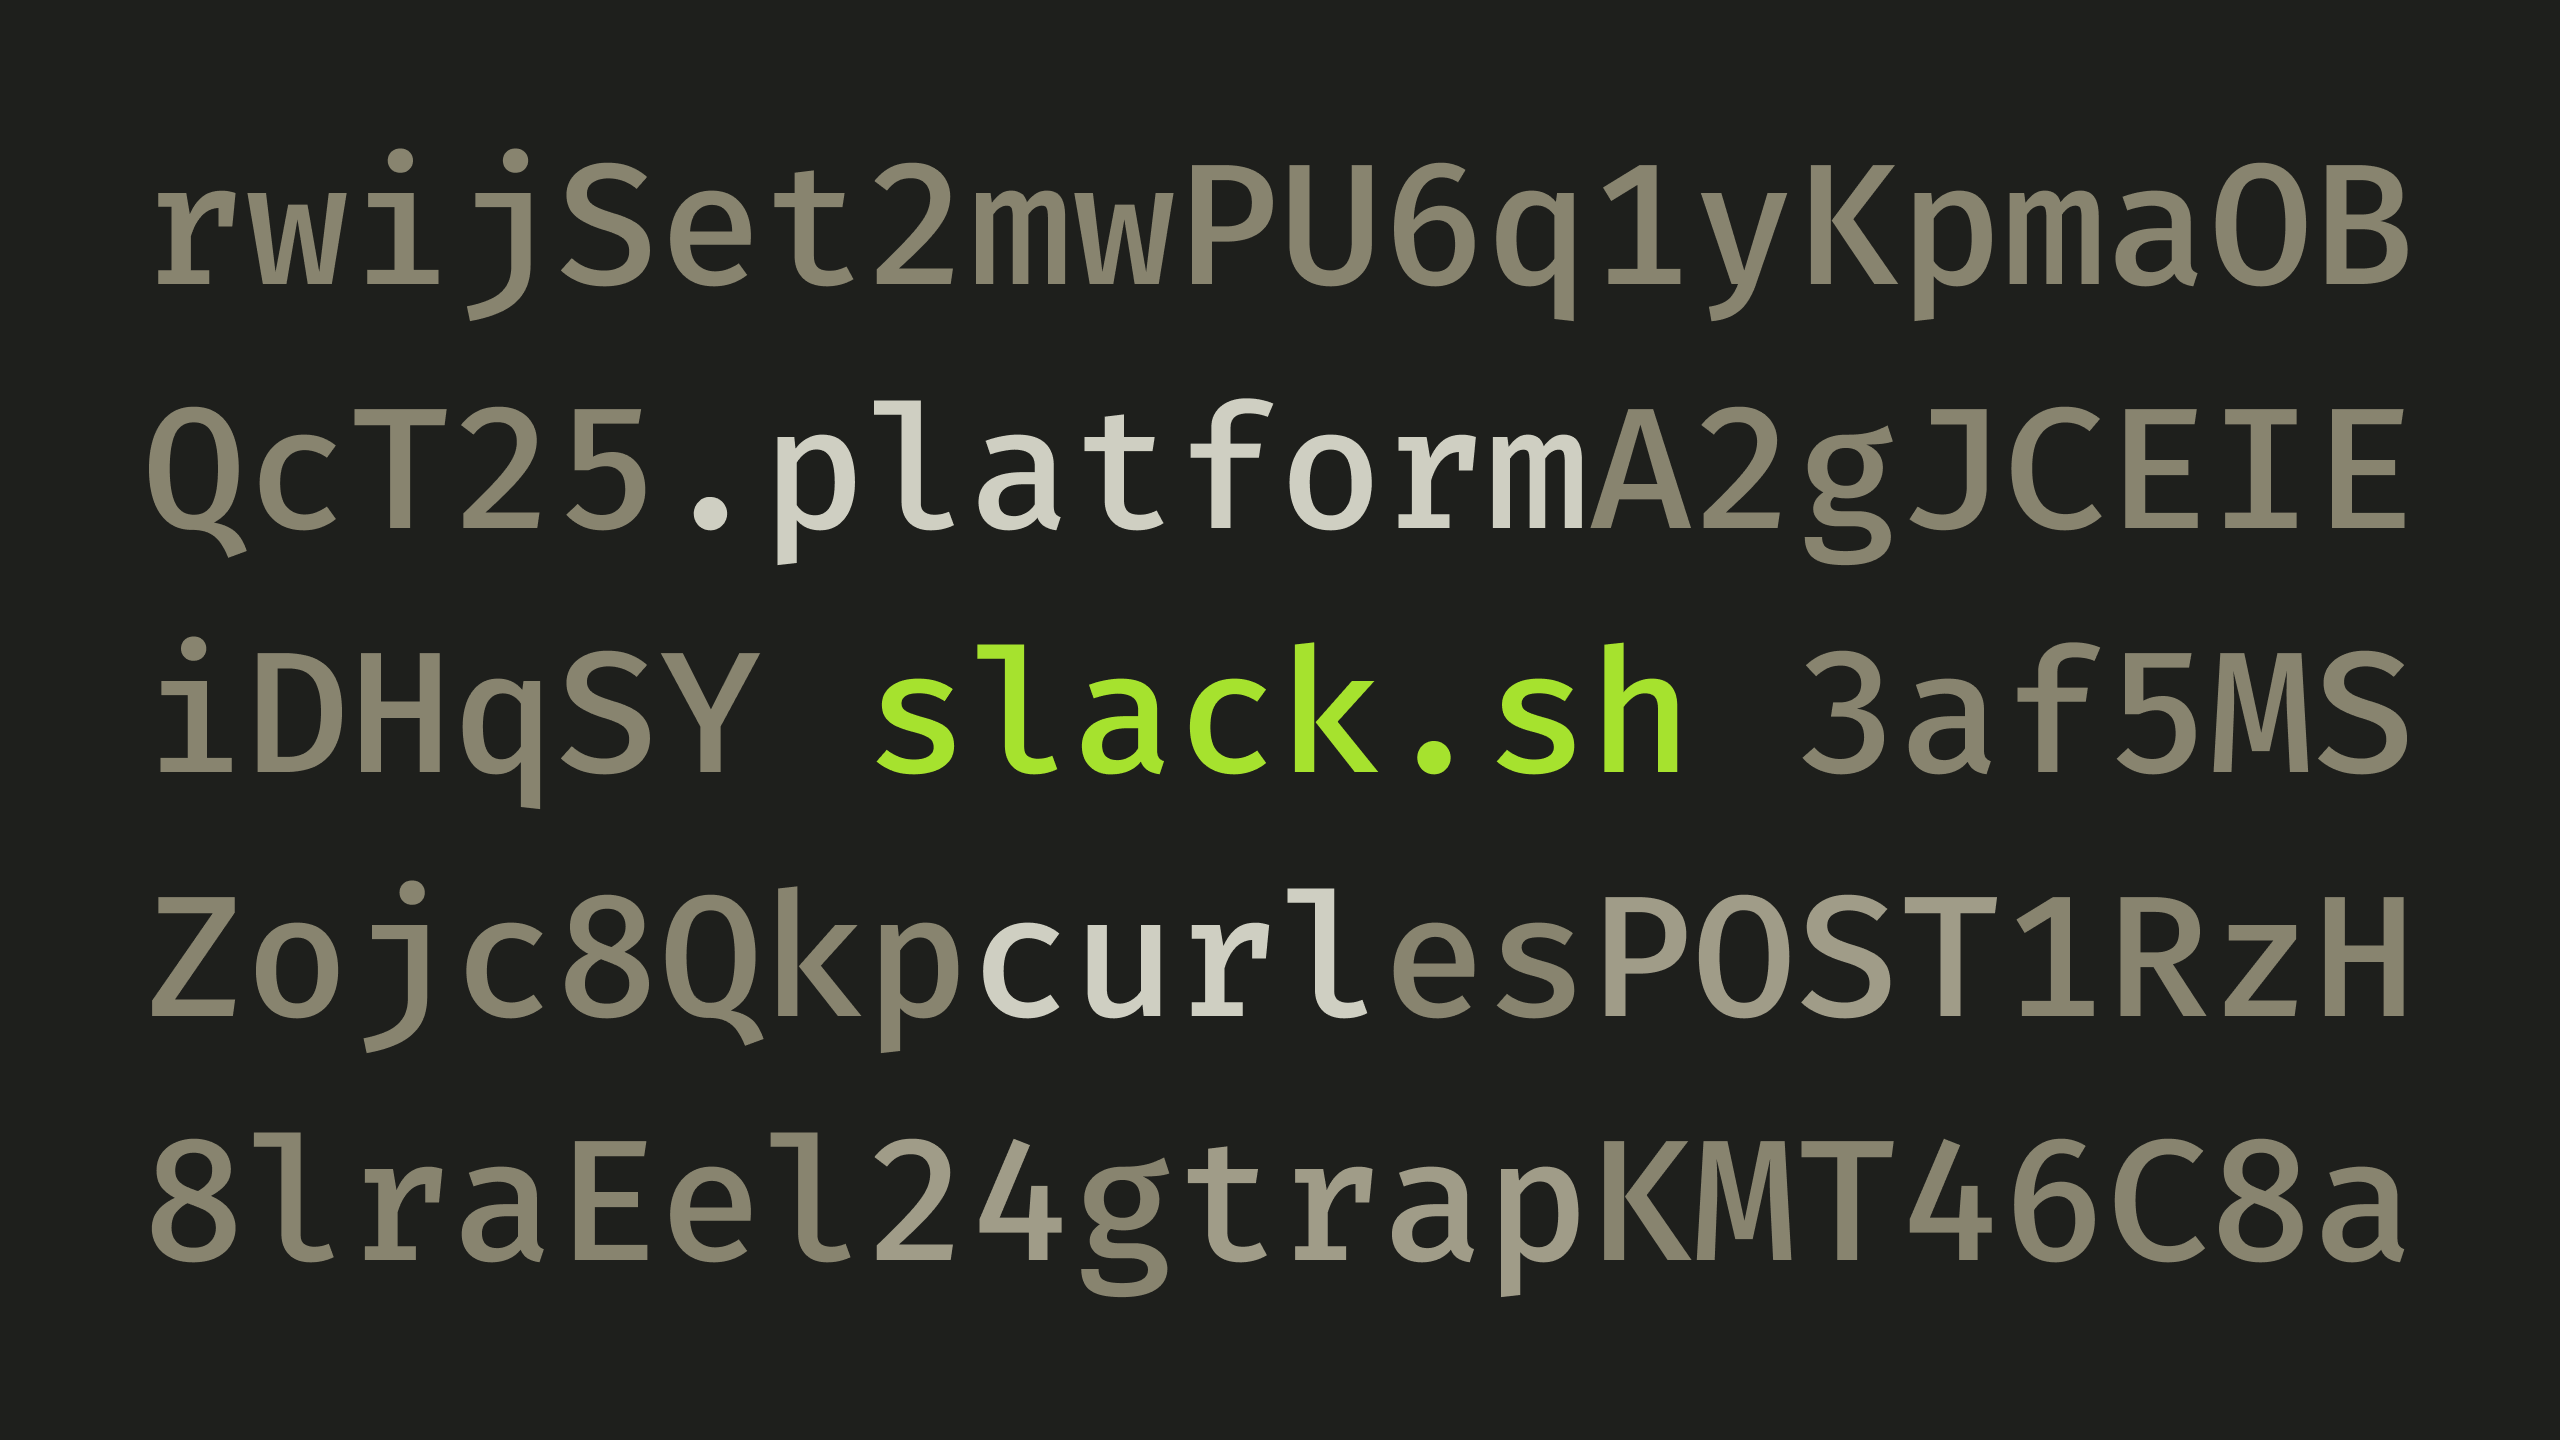 Random characters in monospace font surrounding the text "slack.sh".